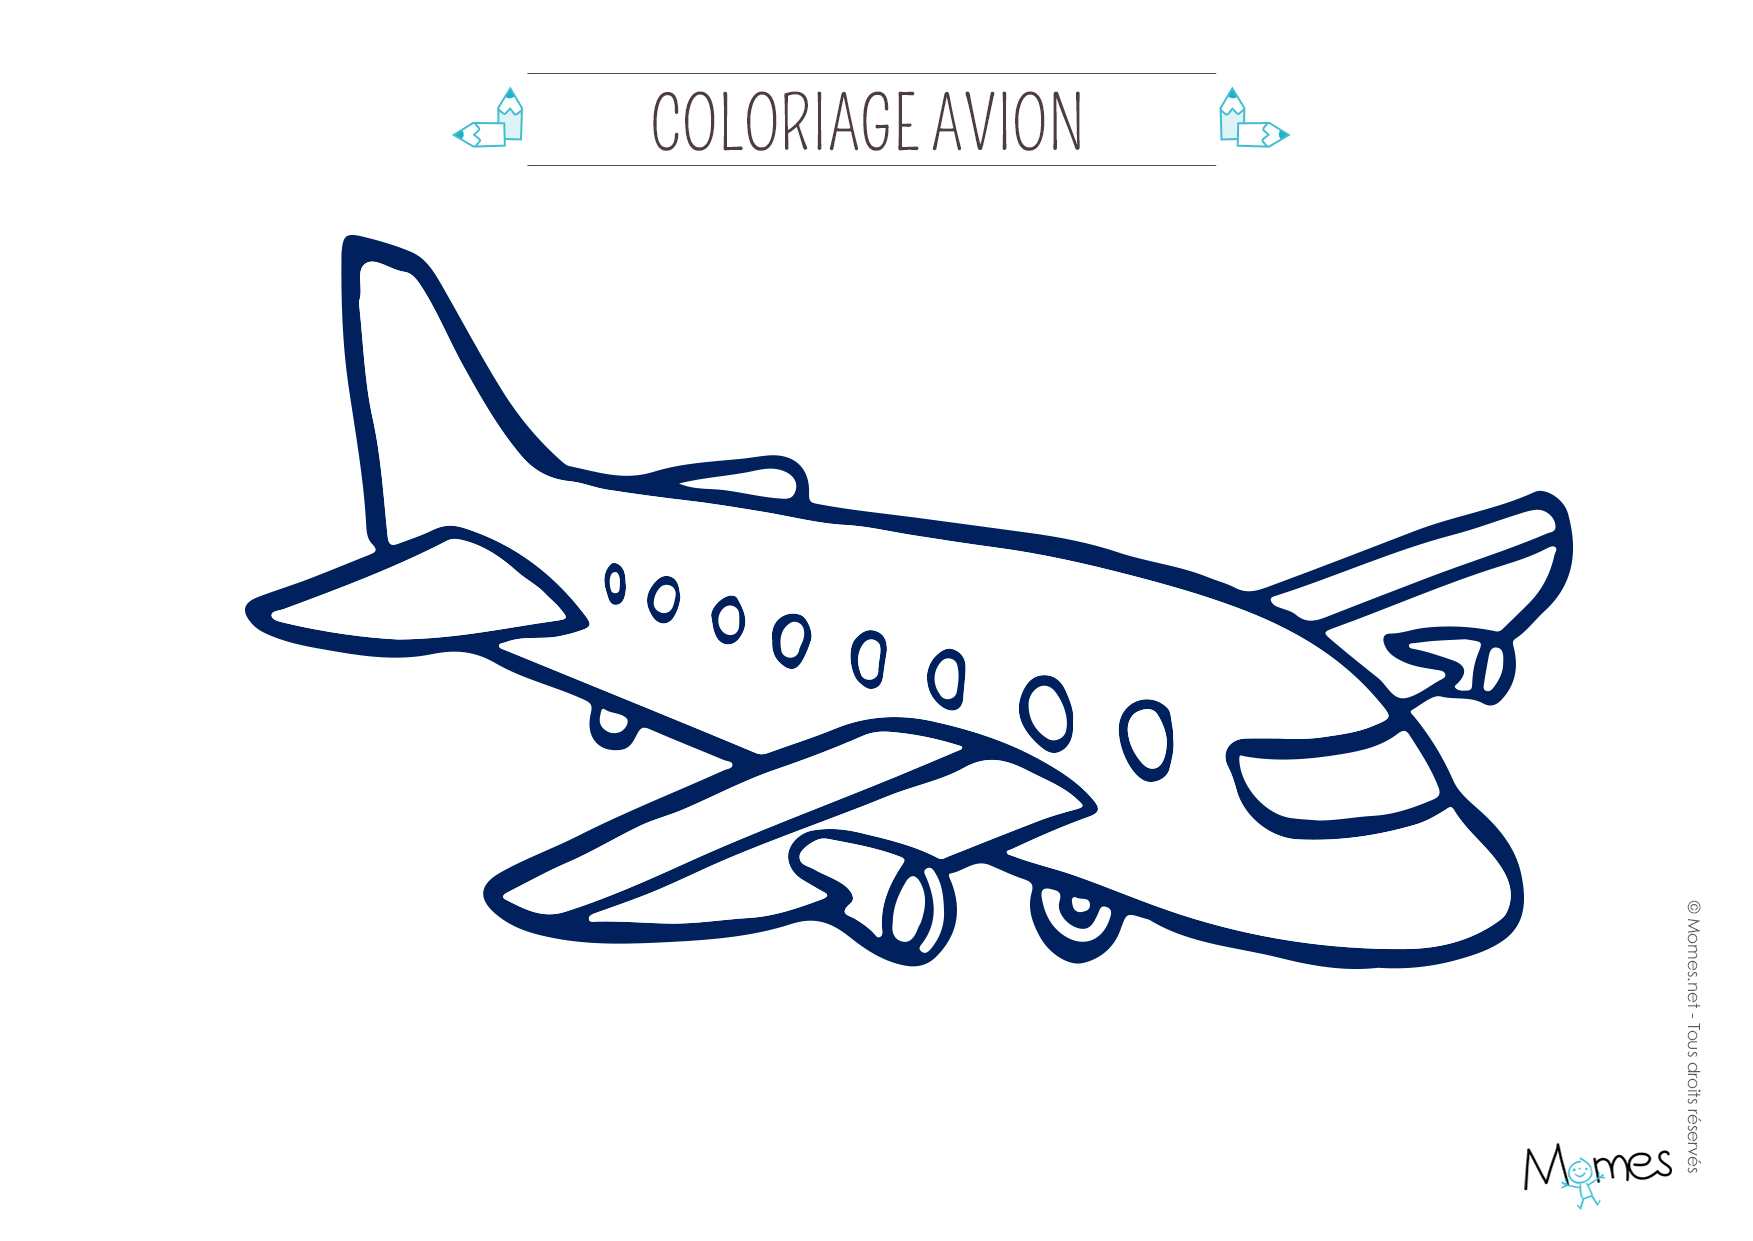 Avion Coloriage | My blog